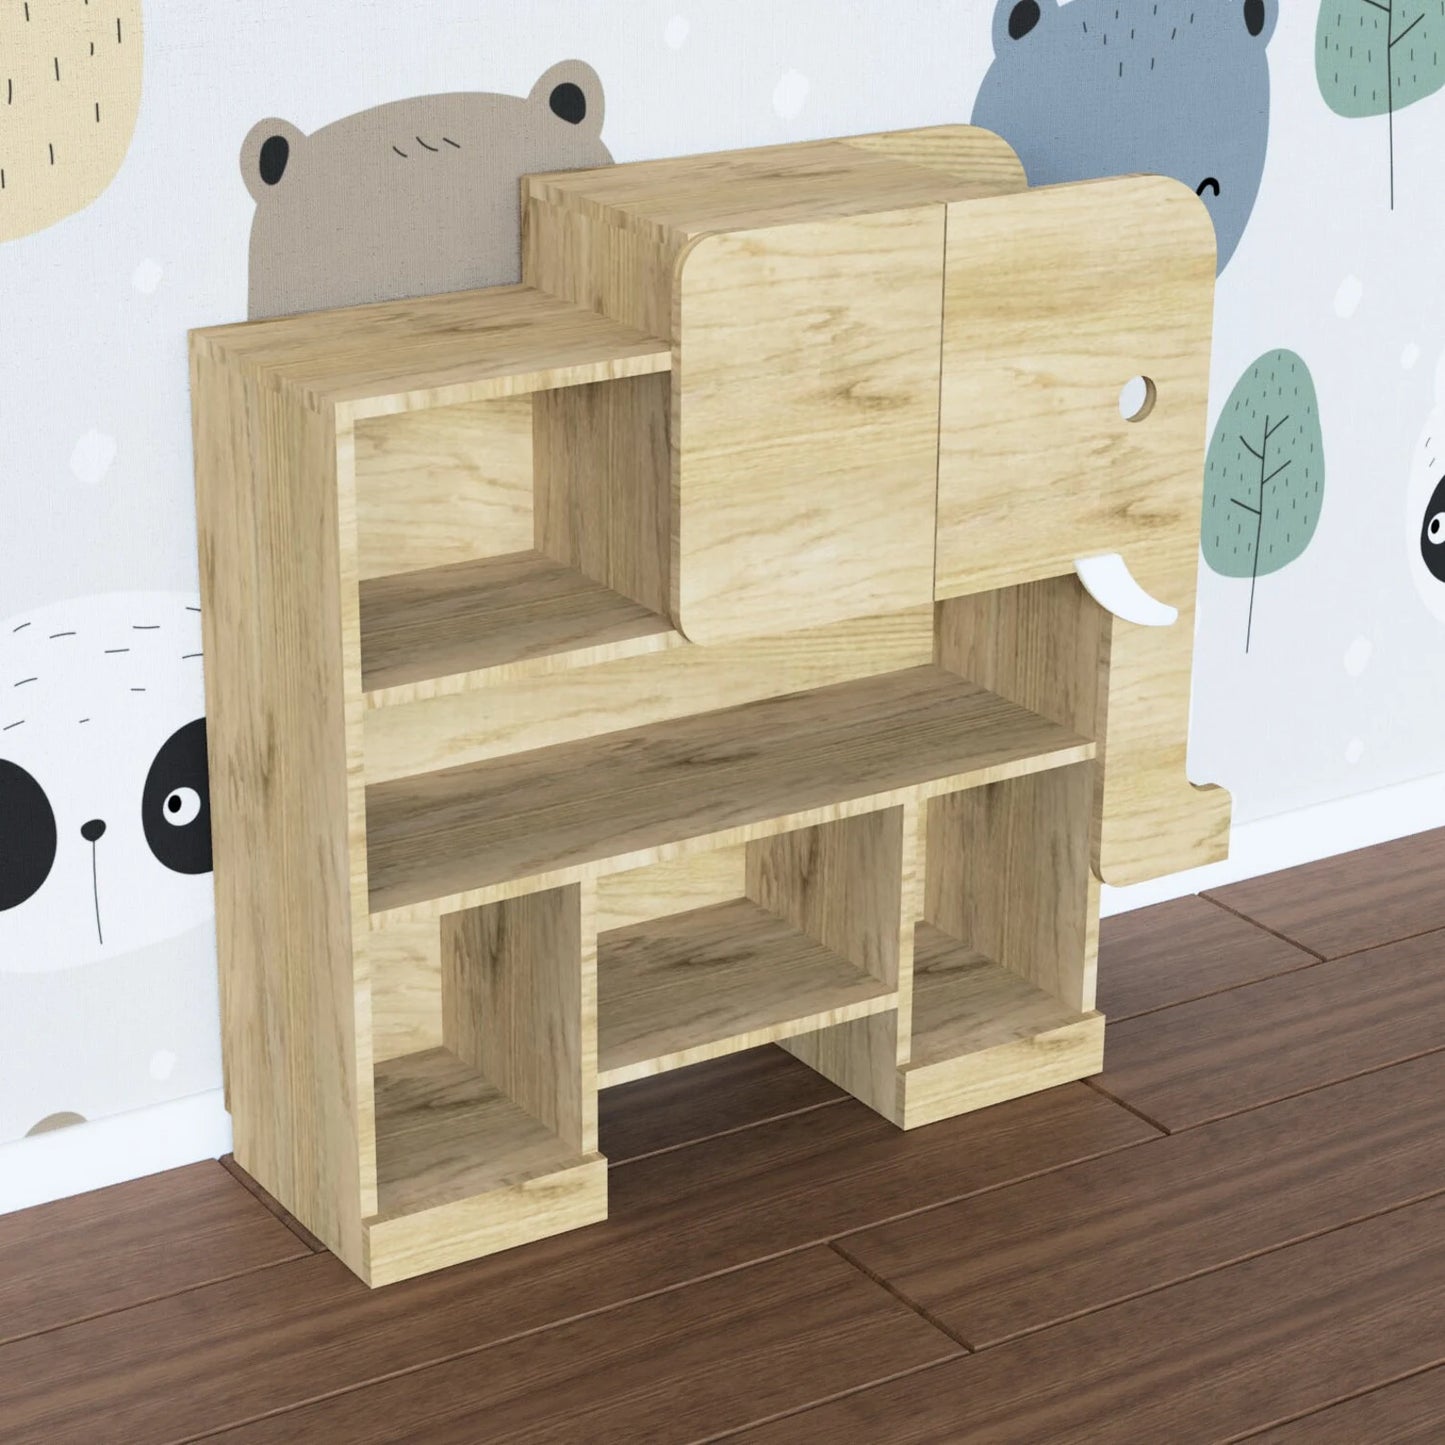 Elephant Shaped Book Shelf - Adorable and Functional Kids' Room Decor